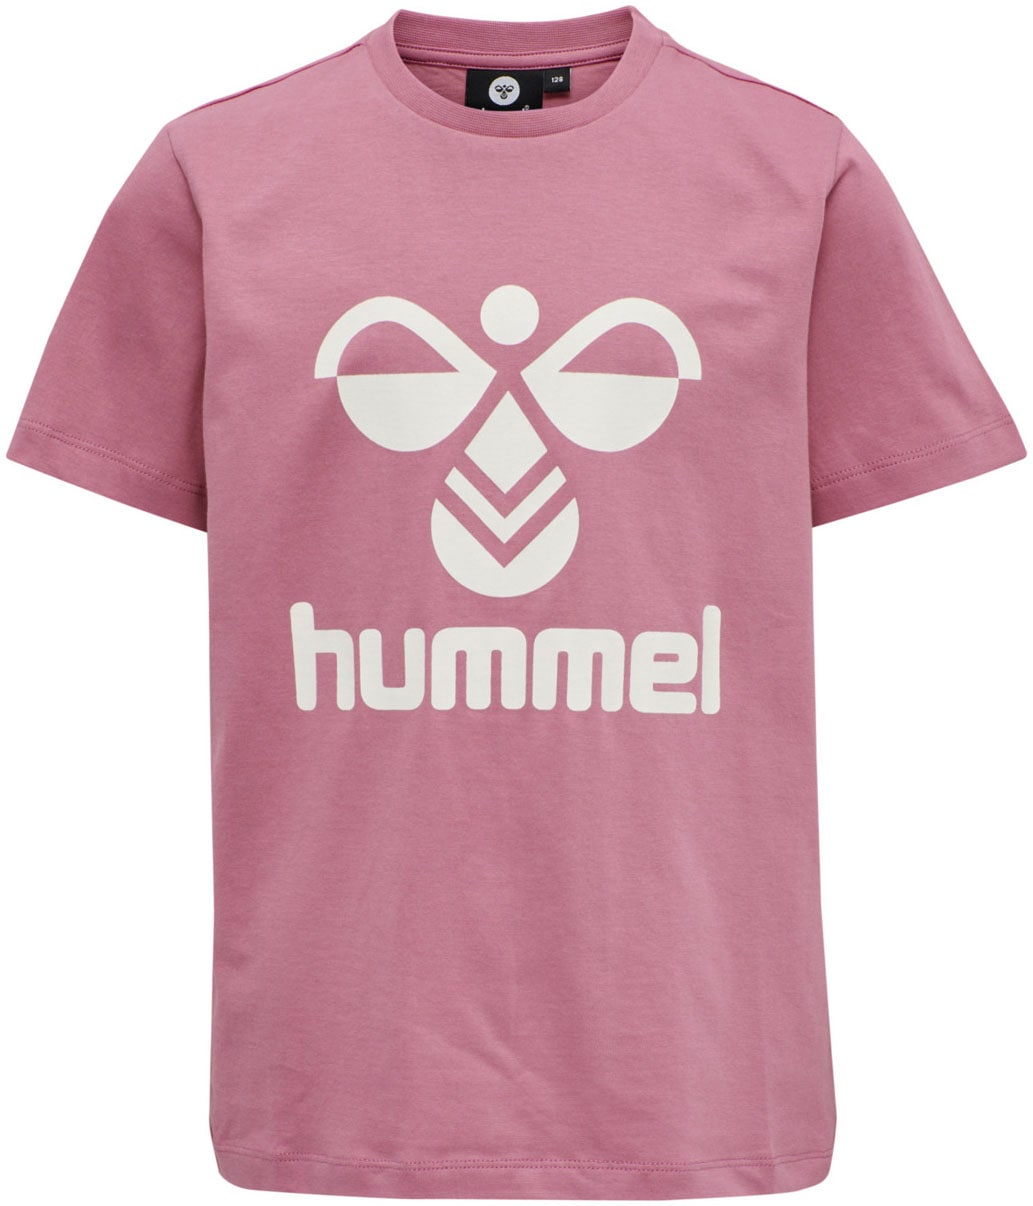 »HMLTRES T-SHIRT Sleeve (1 für bei - Kinder«, tlg.) T-Shirt Short hummel